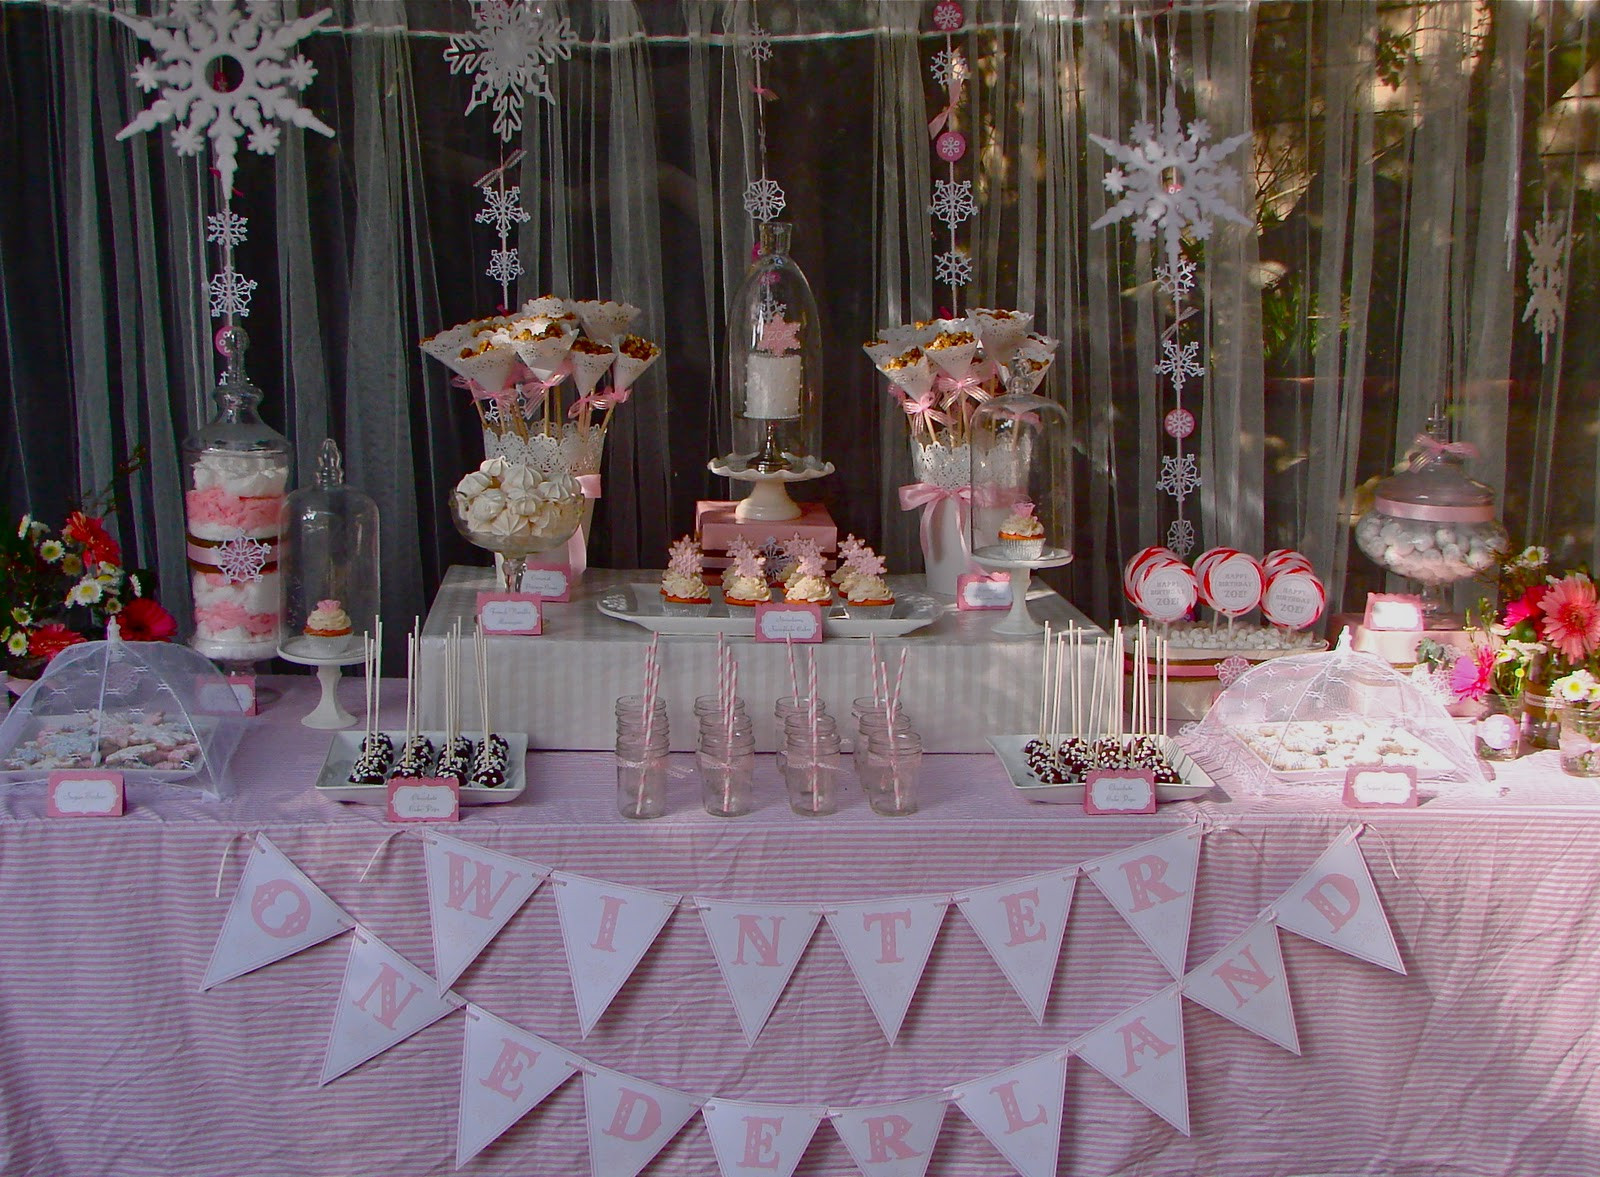 Winter Onederland Party Supplies
 Oh Sugar Events Winter ONEderland Party